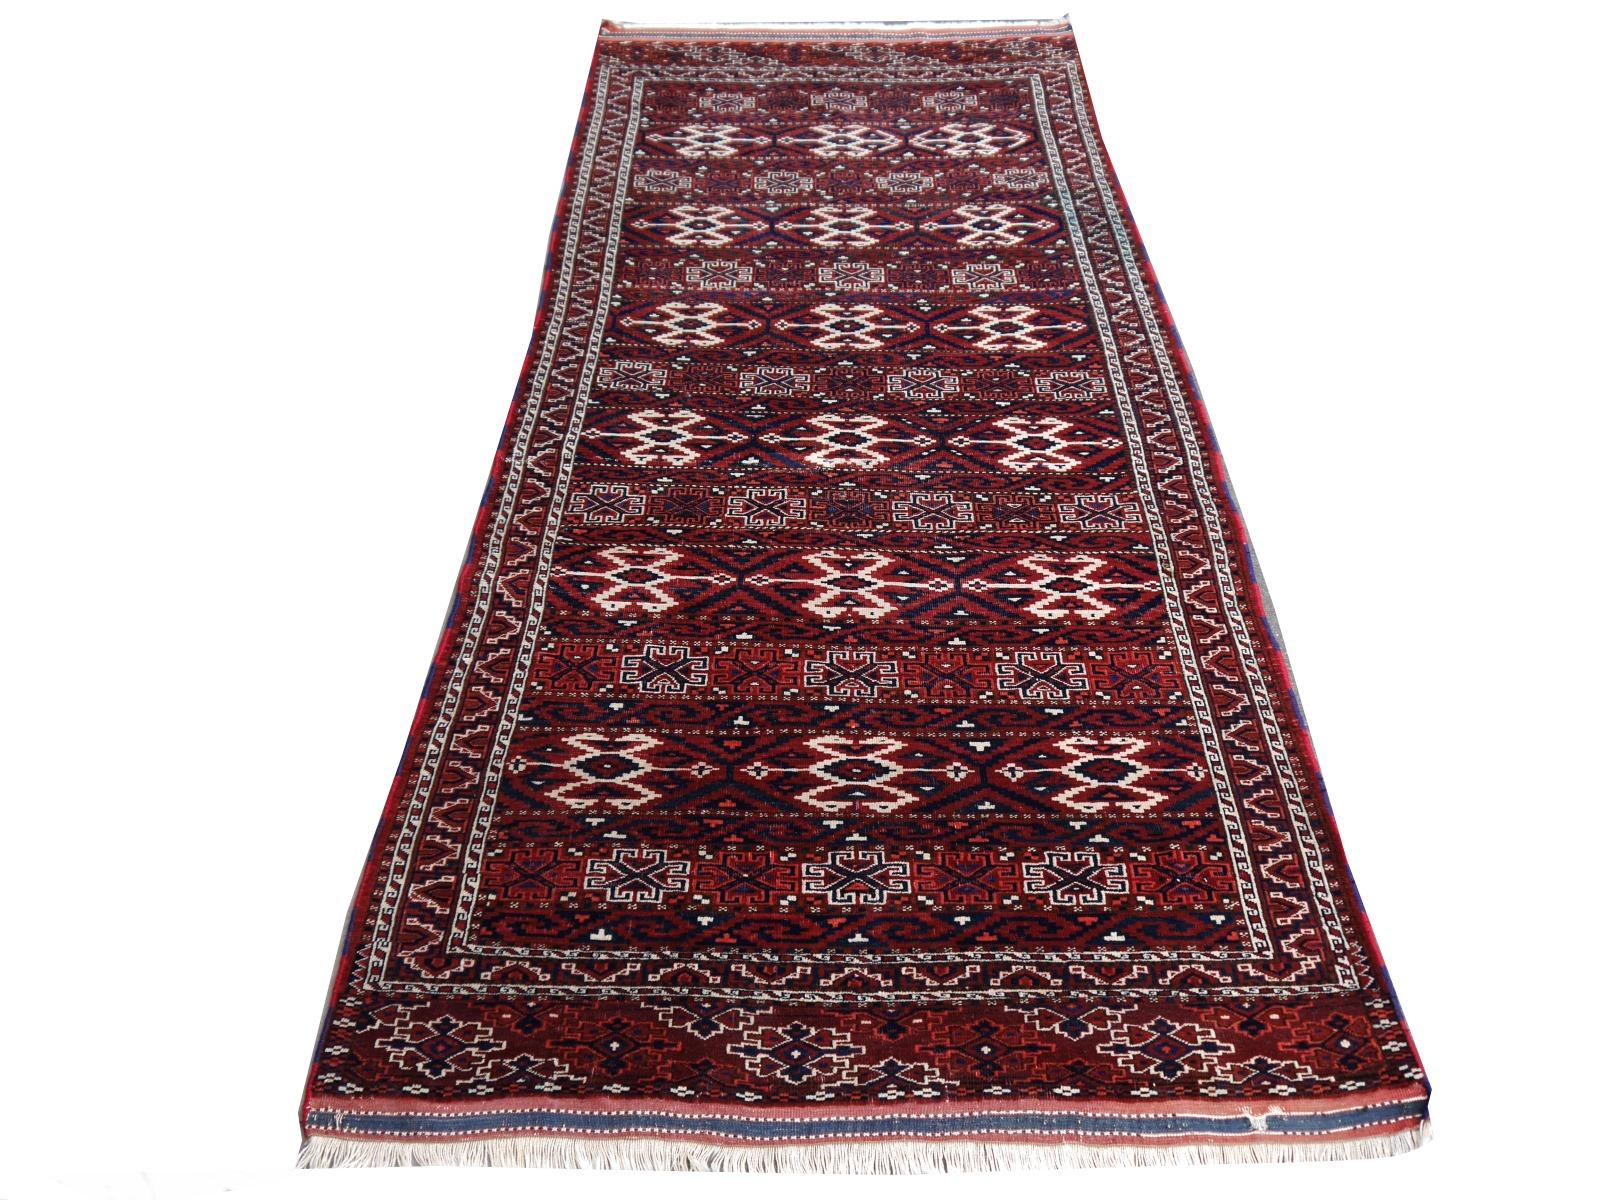 Yomud Turkoman or Turkmen rug, 